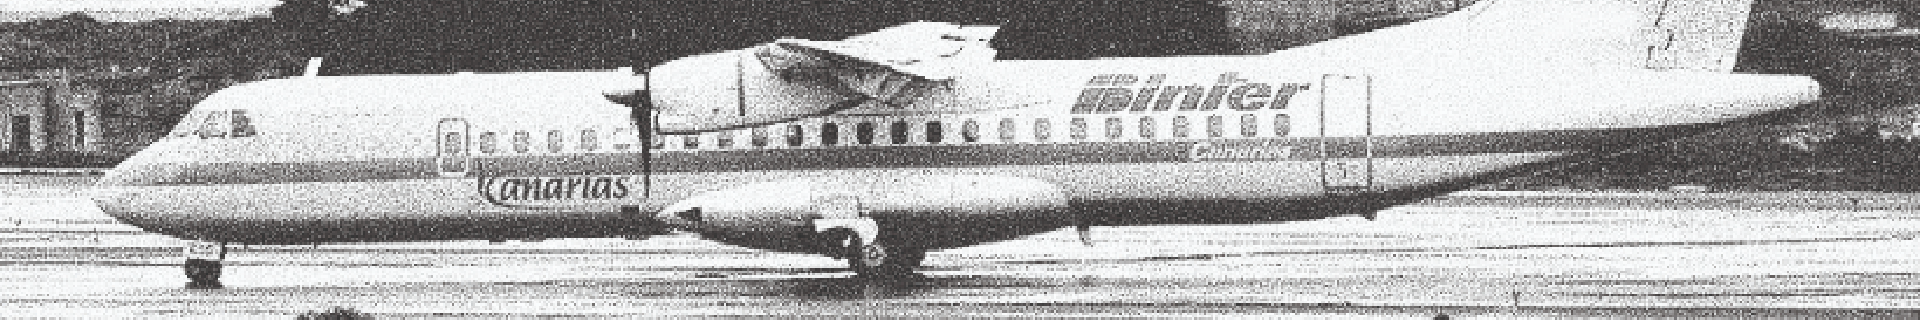 Aeroplano ATR Binter antico